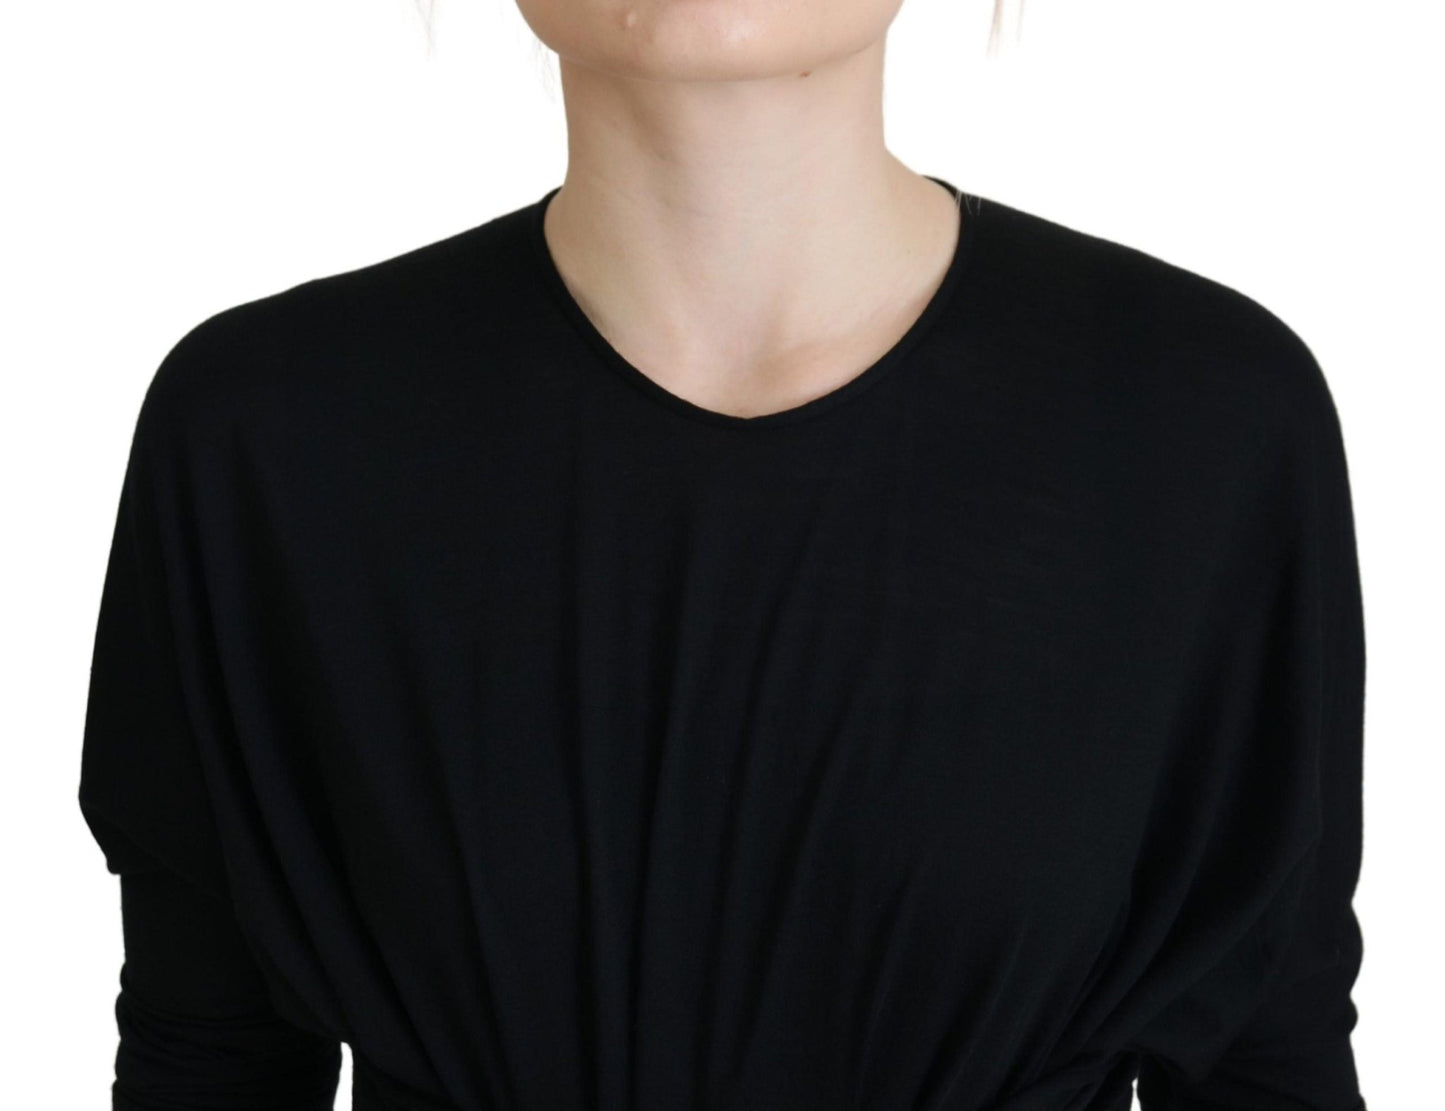 Dolce & Gabbana Black Sheath Midi Gown Wool Wrap Dress